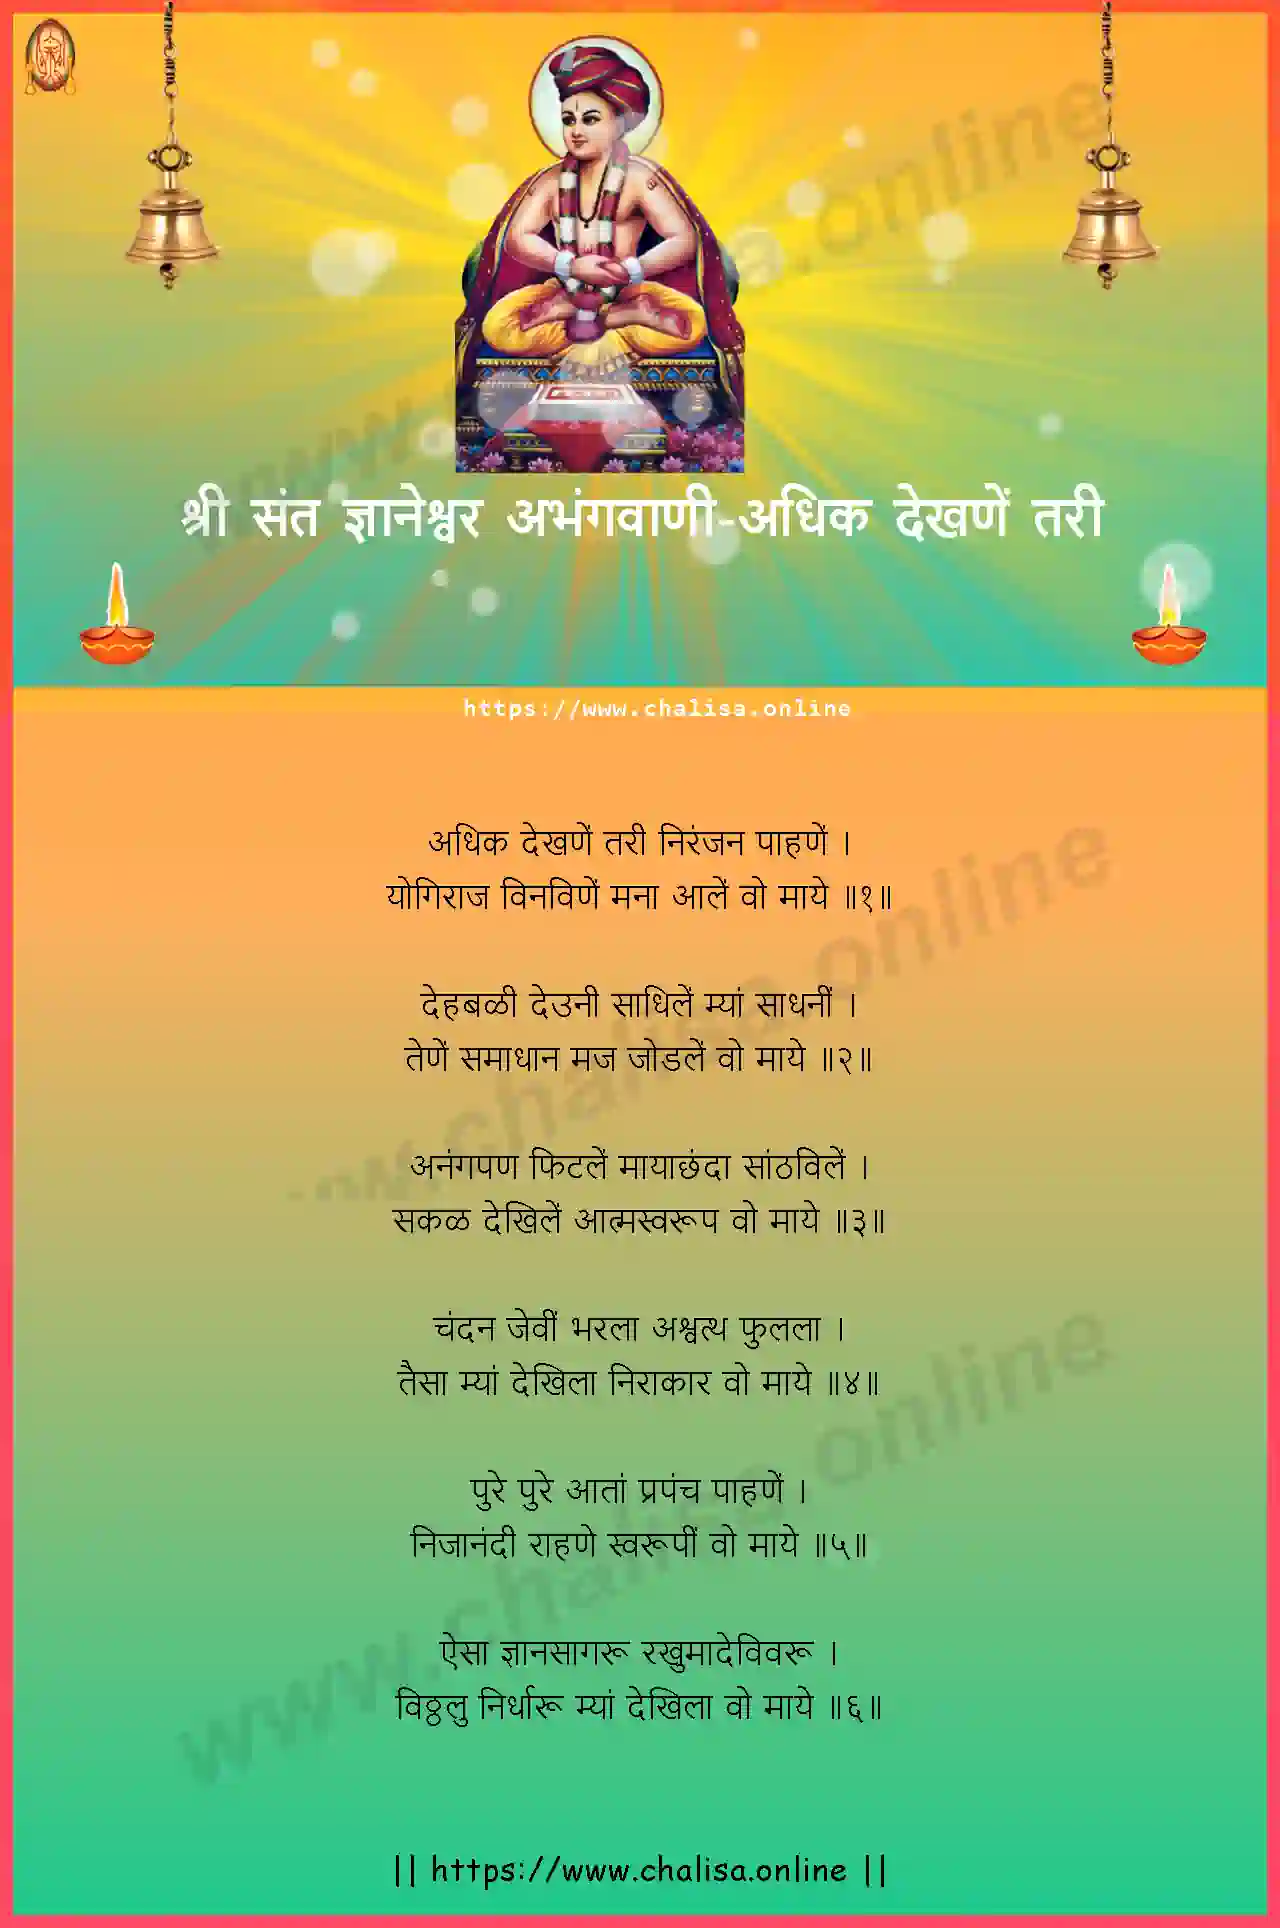 adhik-dekhane-tari-shri-sant-dnyaneshwar-abhang-marathi-lyrics-download